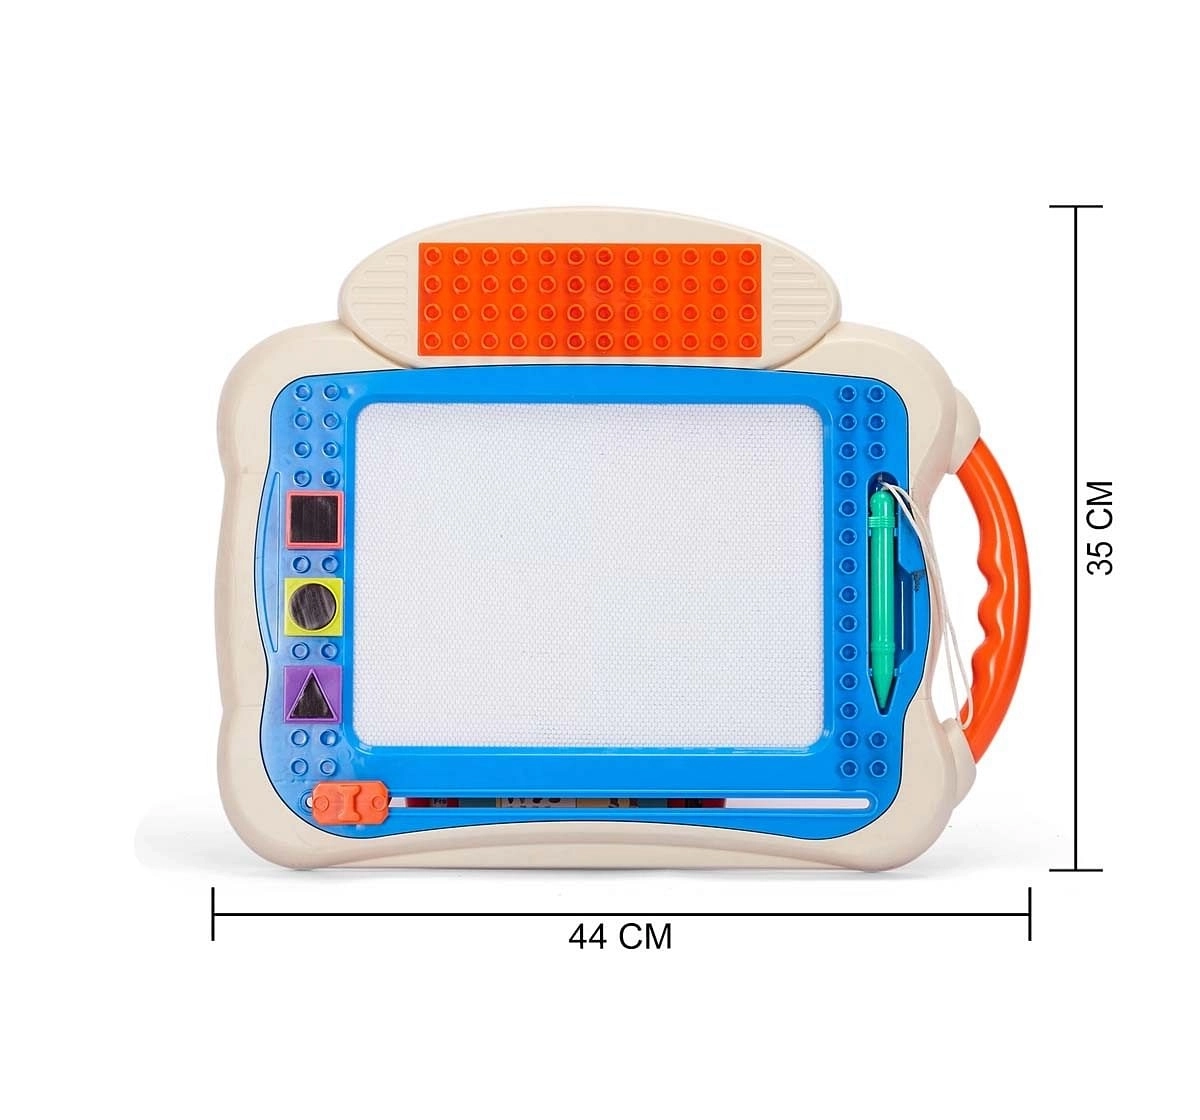 Comdaq Big Doodle Board Blocks - Light Blue Activity Table  for Kids age 3Y+